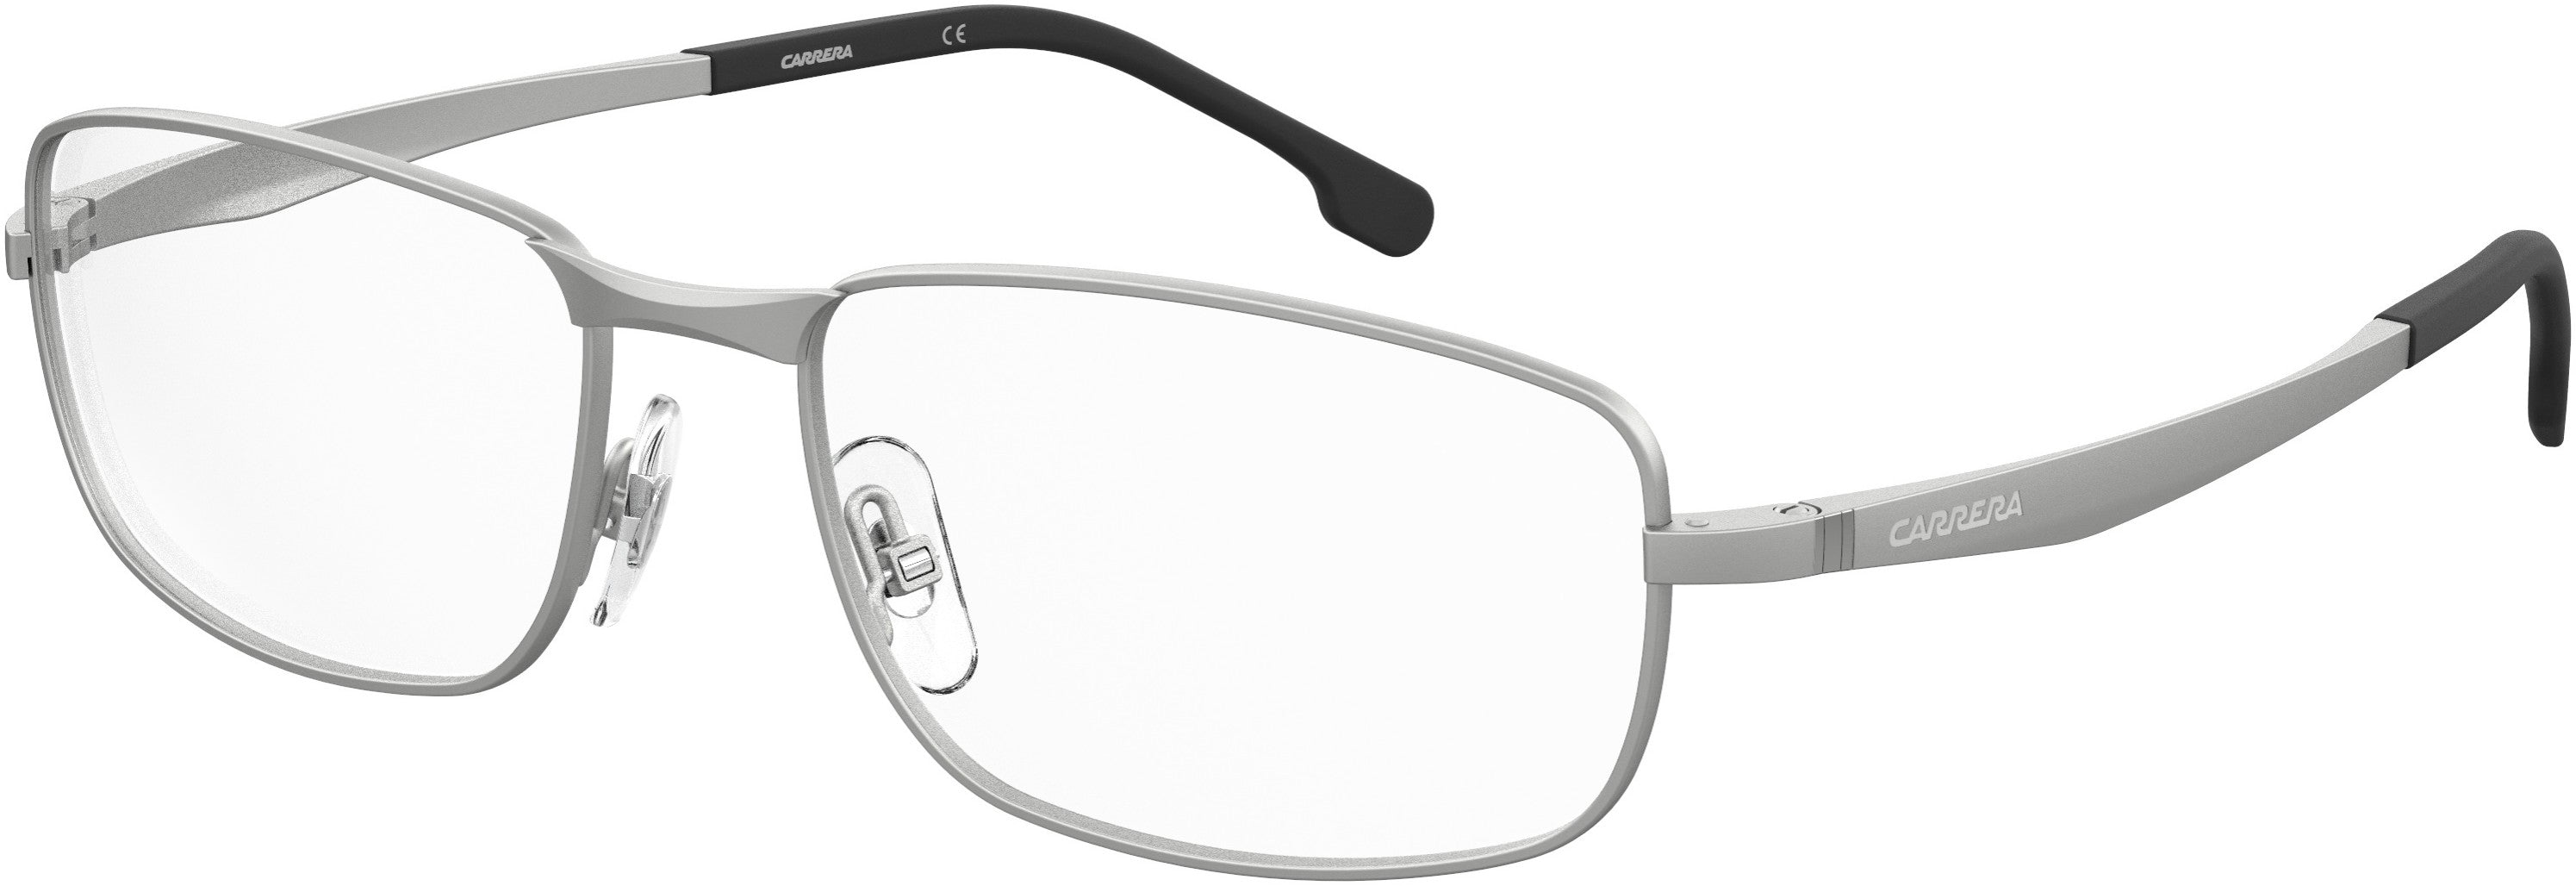  Carrera 8854 Rectangular Eyeglasses 0R81-0R81  Matte Ruthenium (00 Demo Lens)